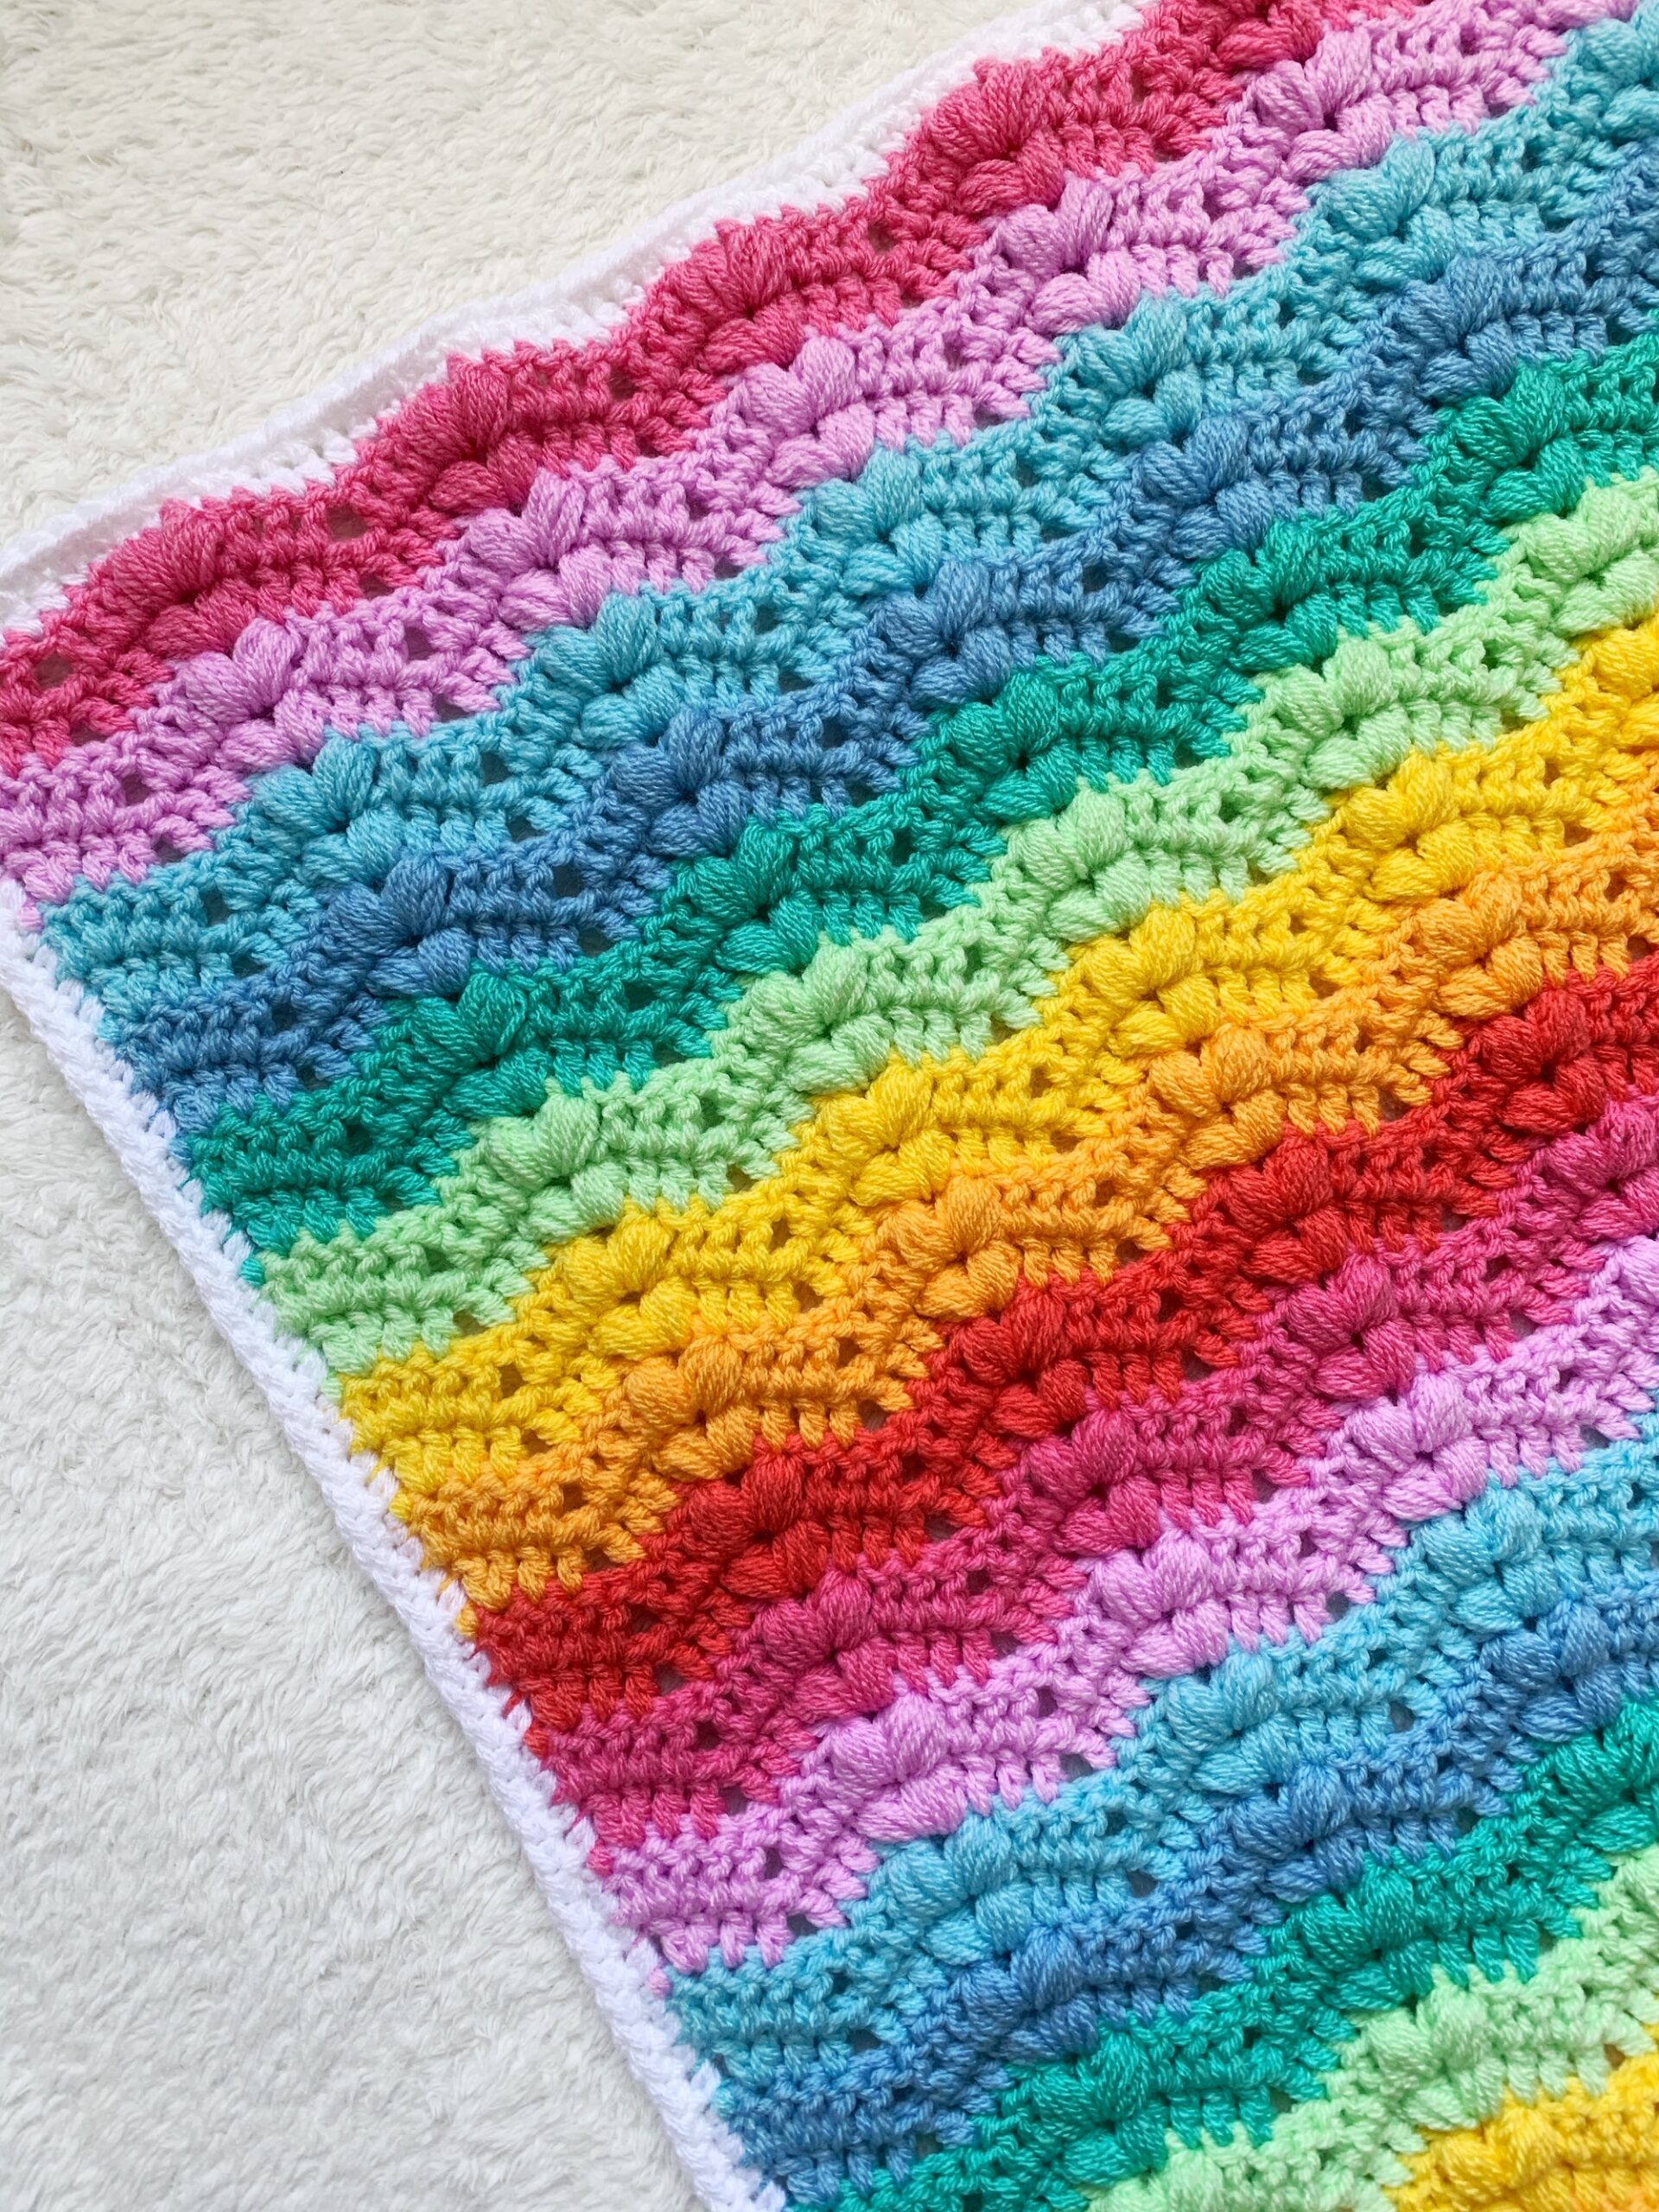 crochet baby blanket - pink and teal Crochet baby blanket - baby ...